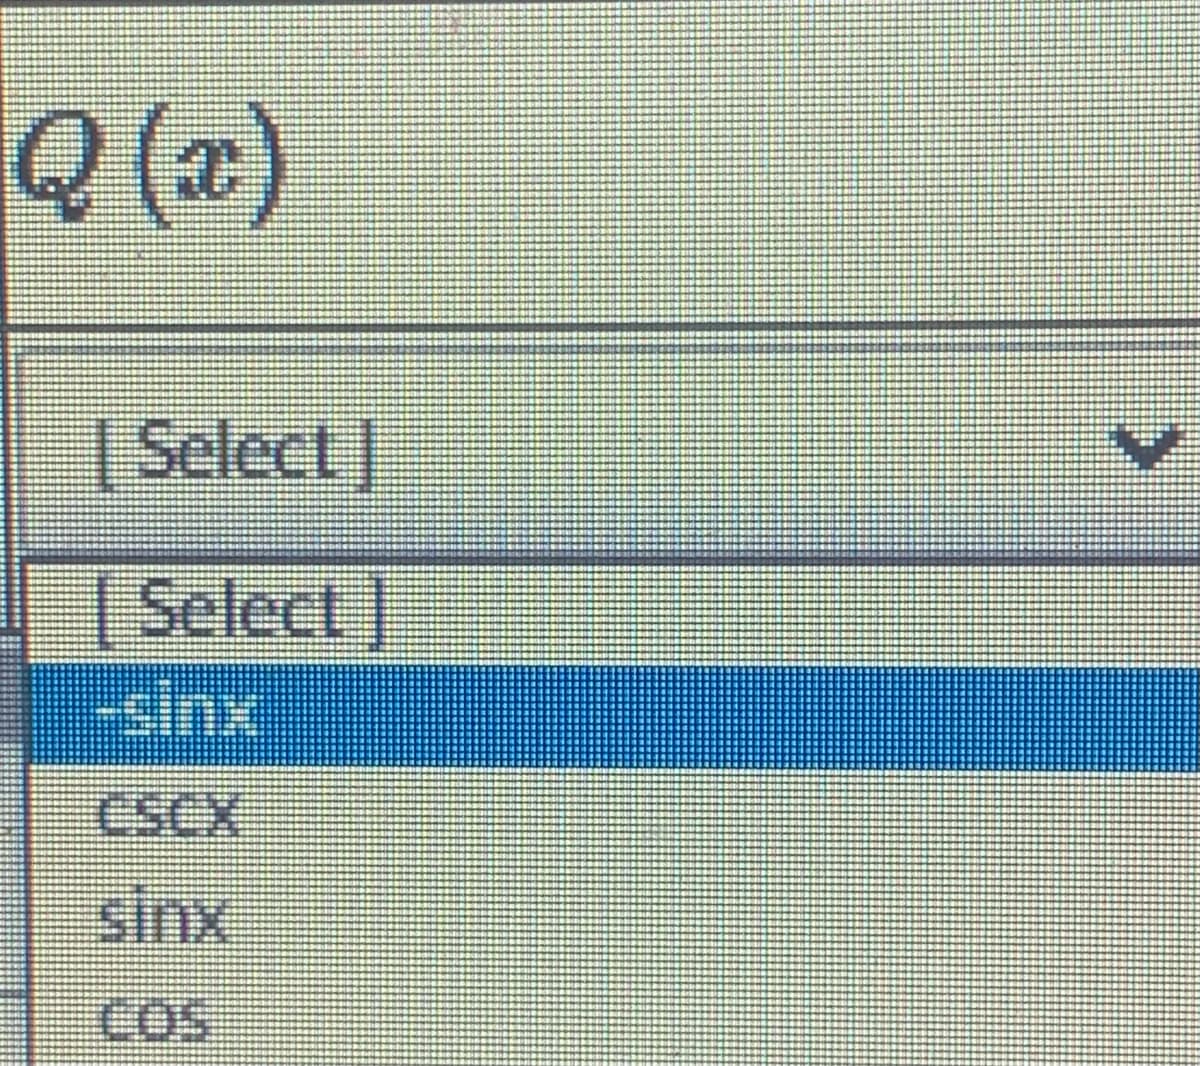 Q (x)
|Select|
Select
-sinx
CSCX
sinx
COS
